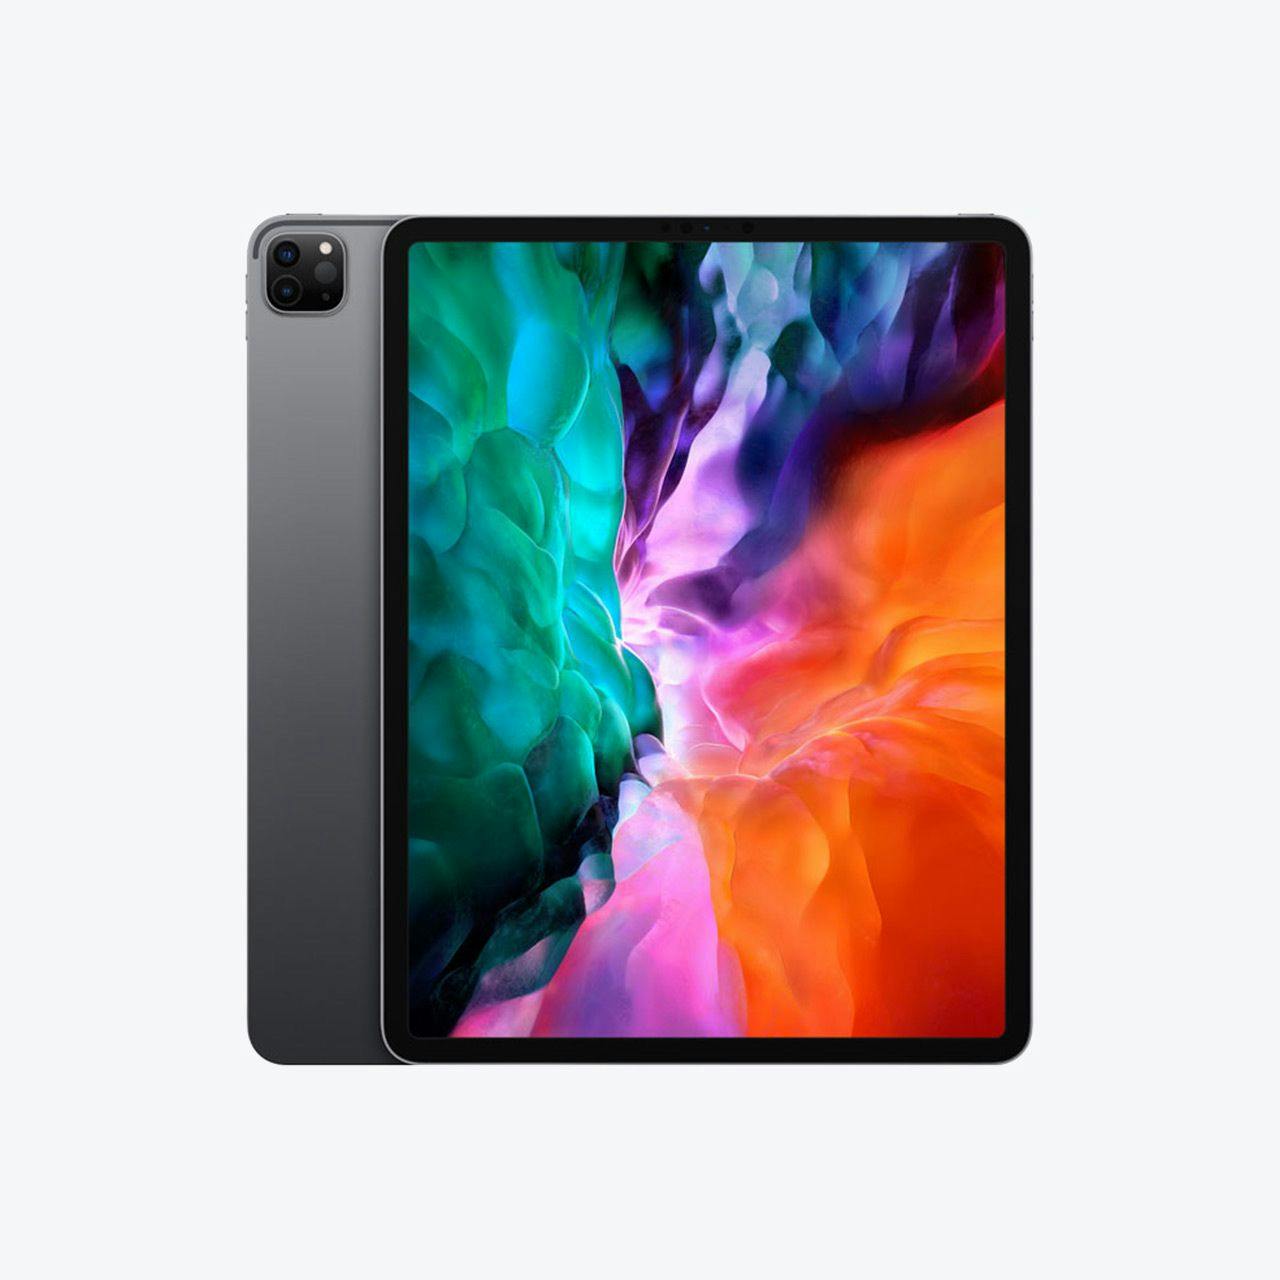 Image of iPad Pro 12.9-inch (4th Generation).